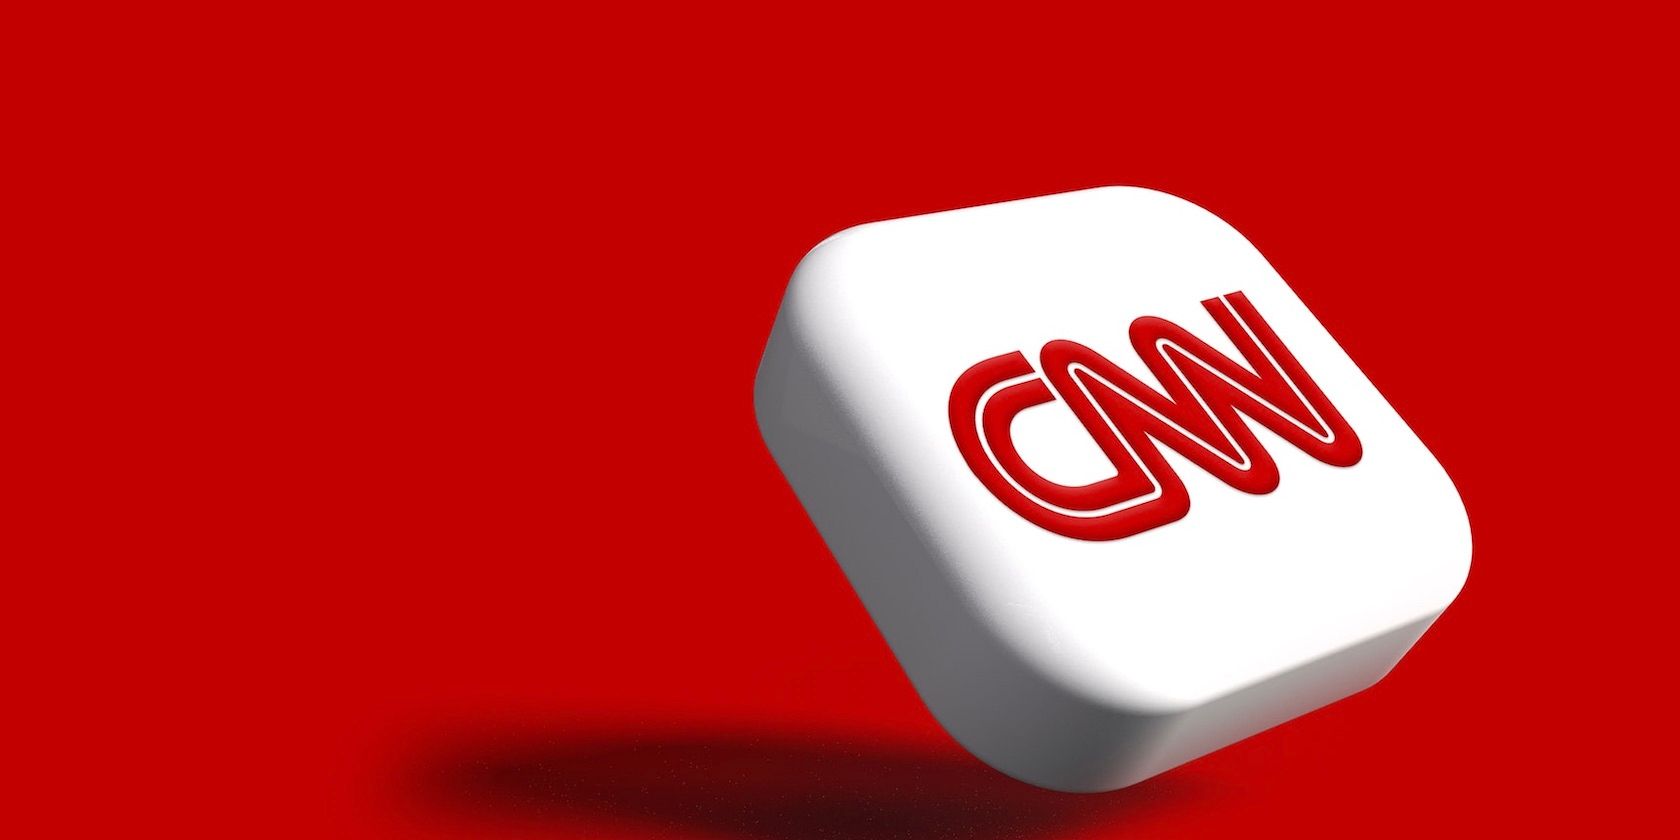 CNN Logo on red background 